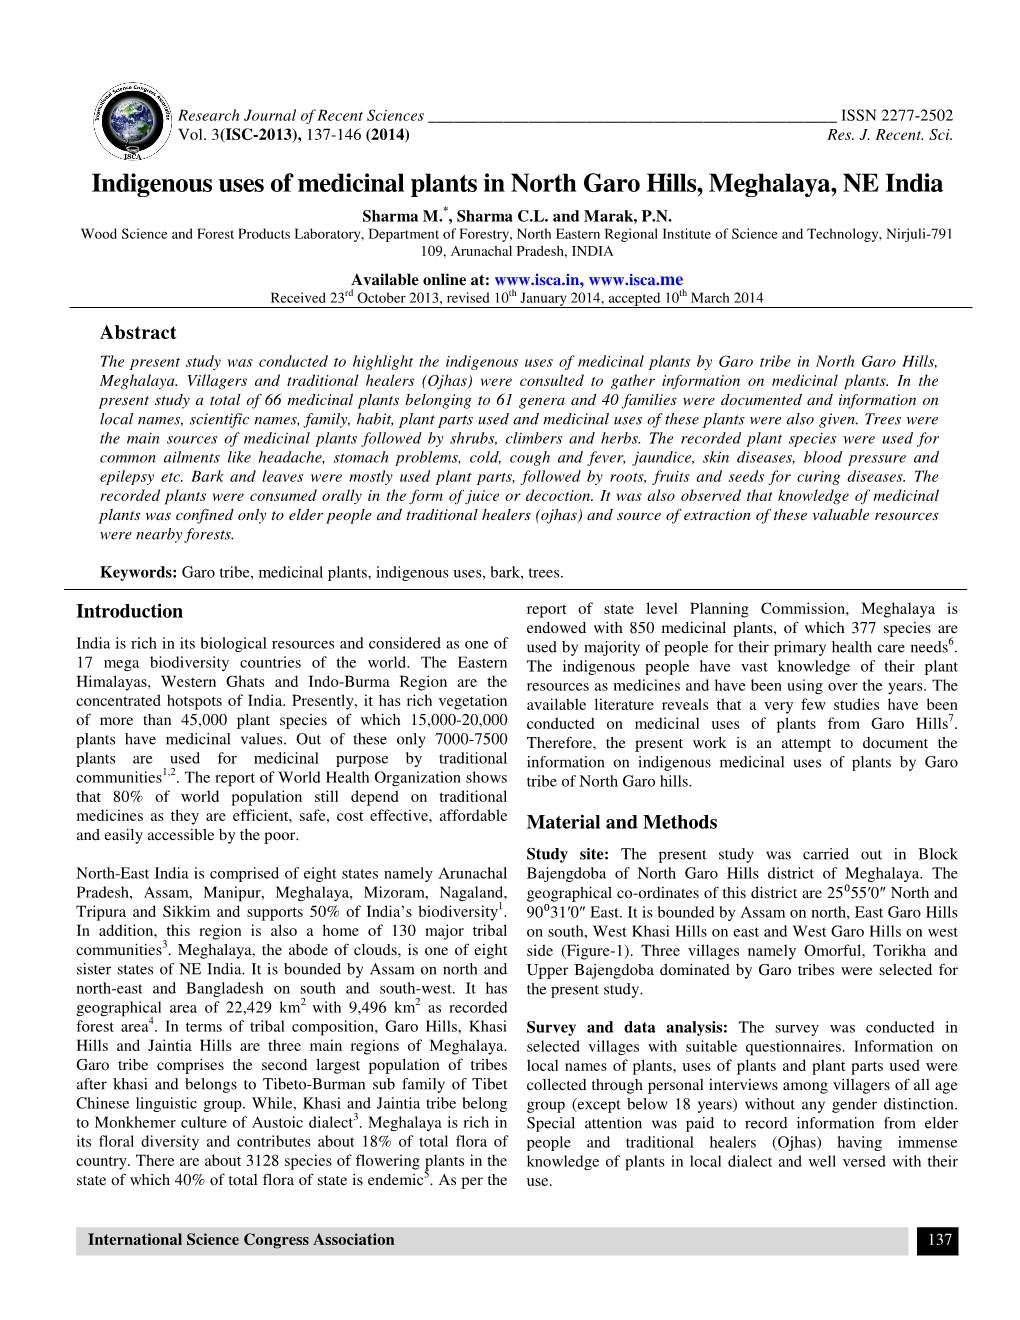 Indigenous Uses of Medicinal Plants in North Garo Hills, Meghalaya, NE India Sharma M